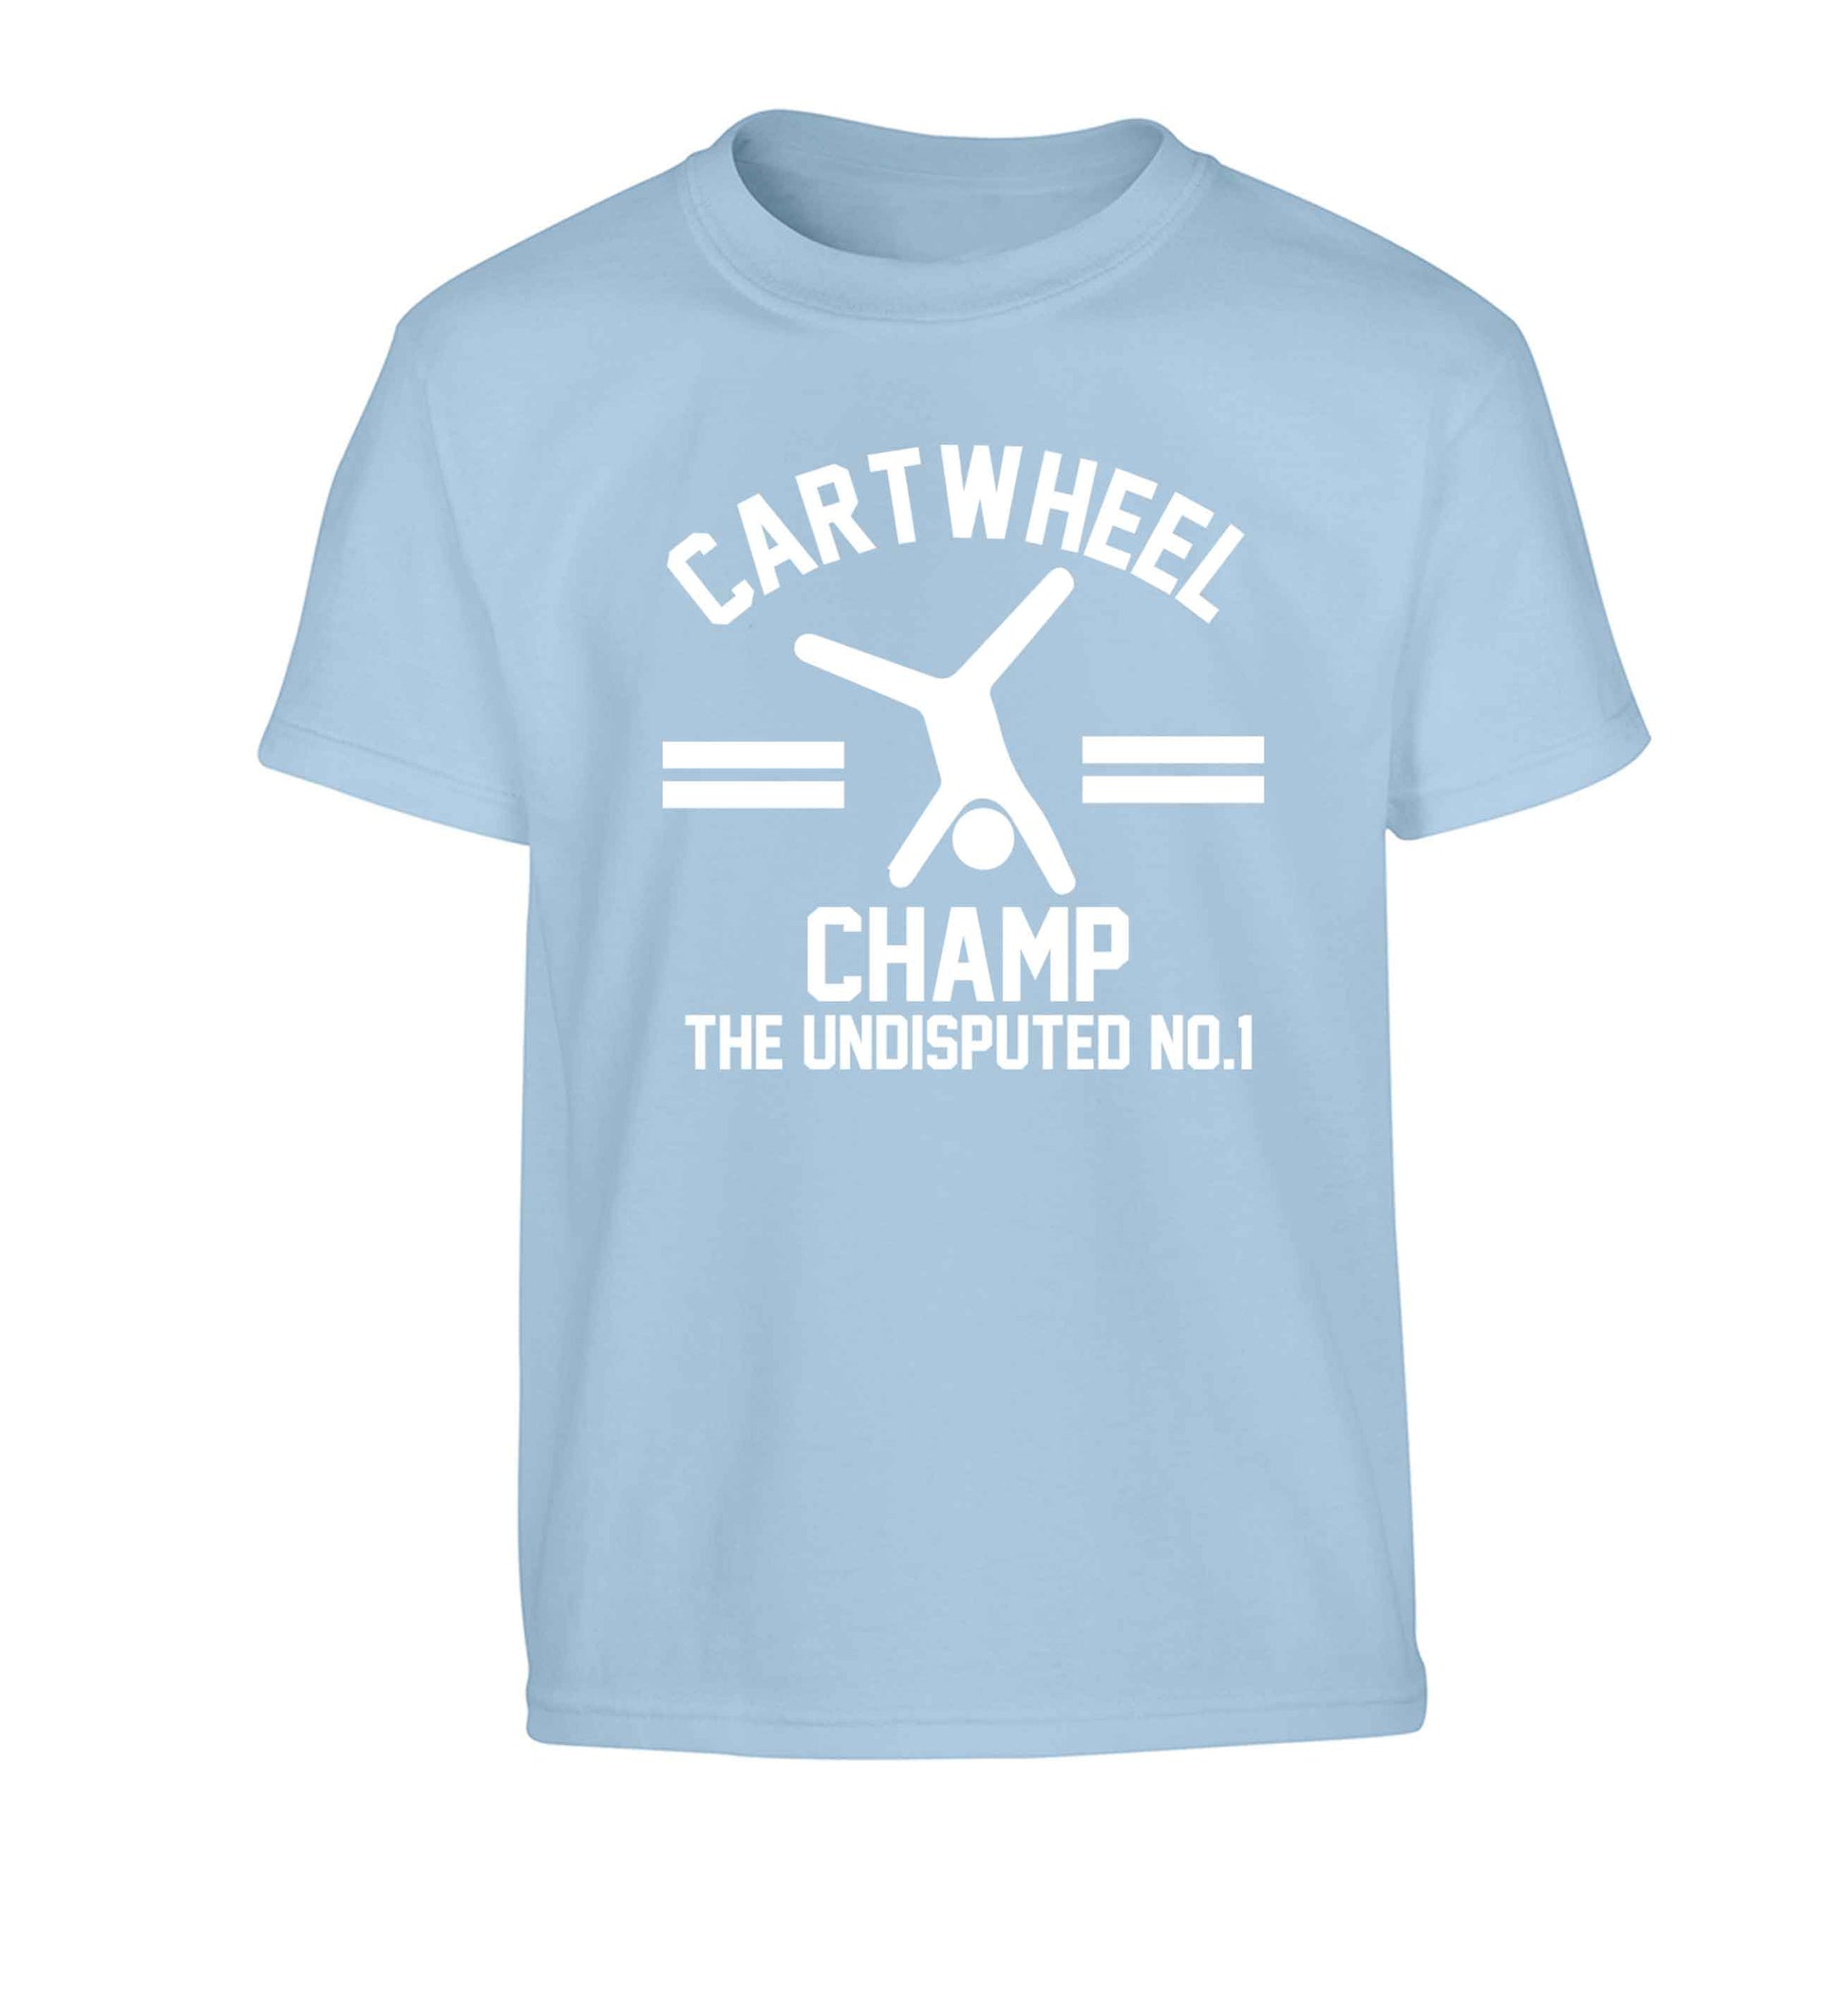 Undisputed cartwheel championship no.1  Children's light blue Tshirt 12-13 Years